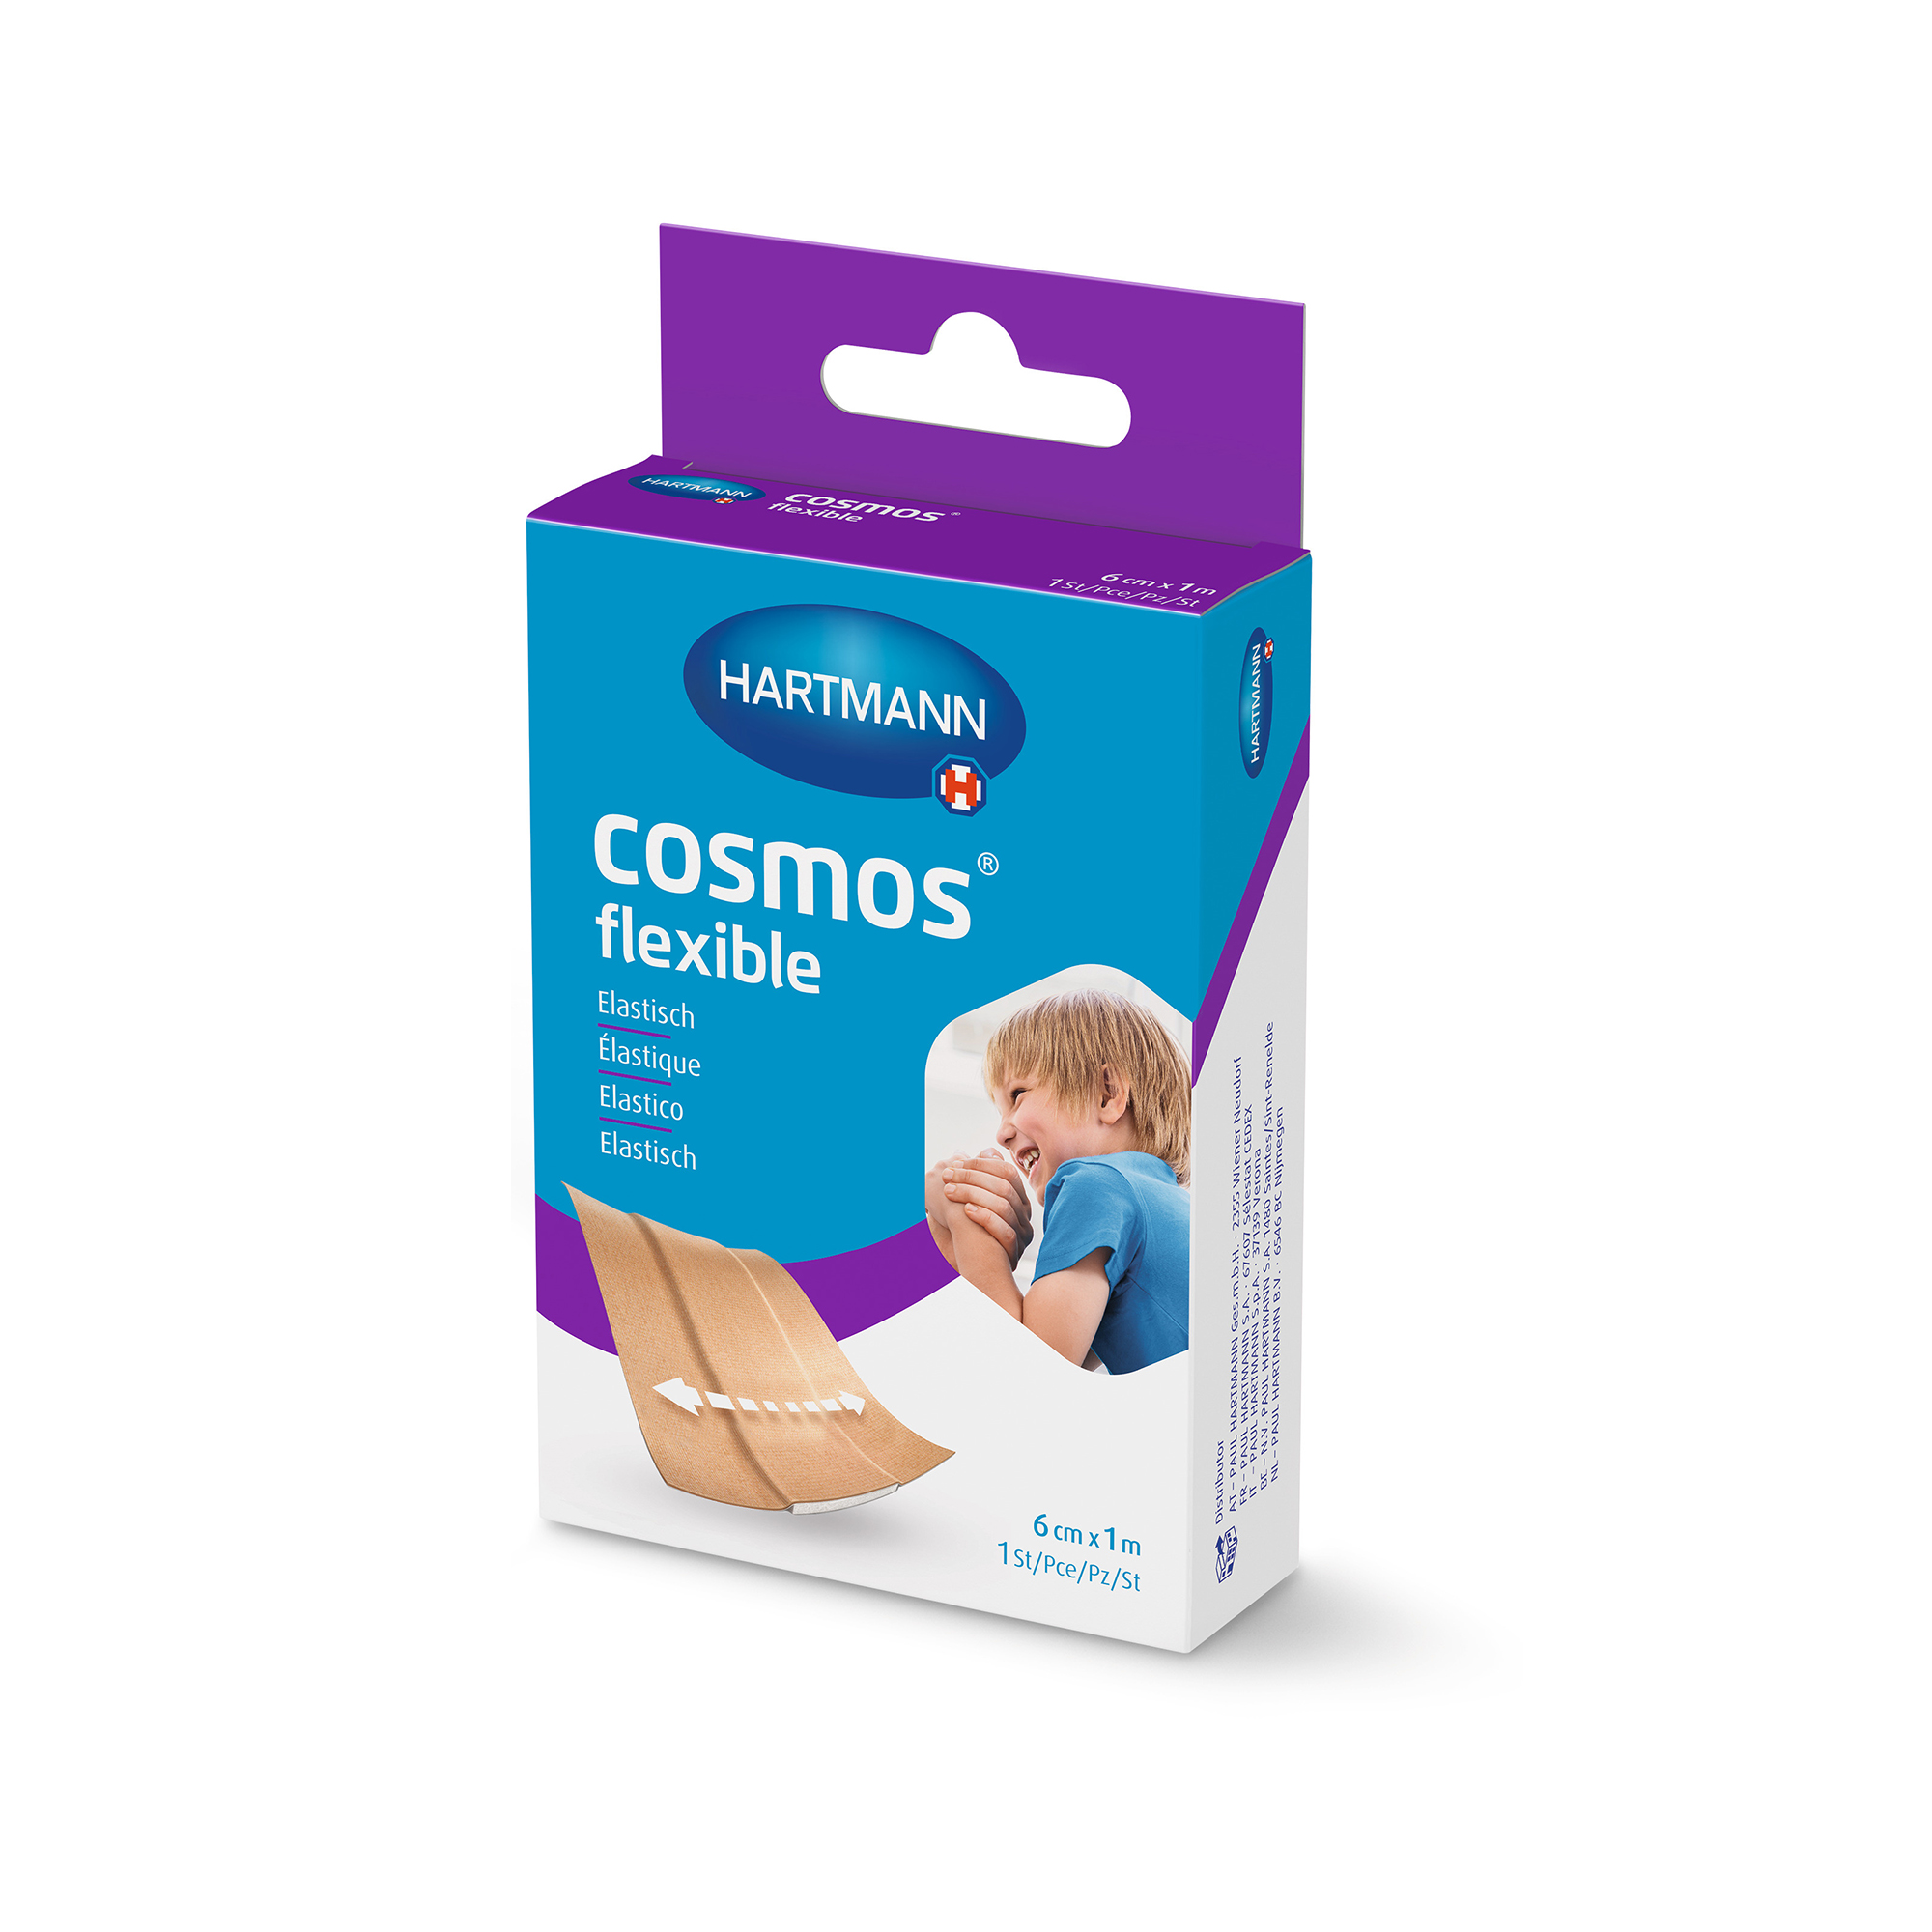 Hartmann Cosmos® flexible 6 cm x 1 m, in folding box